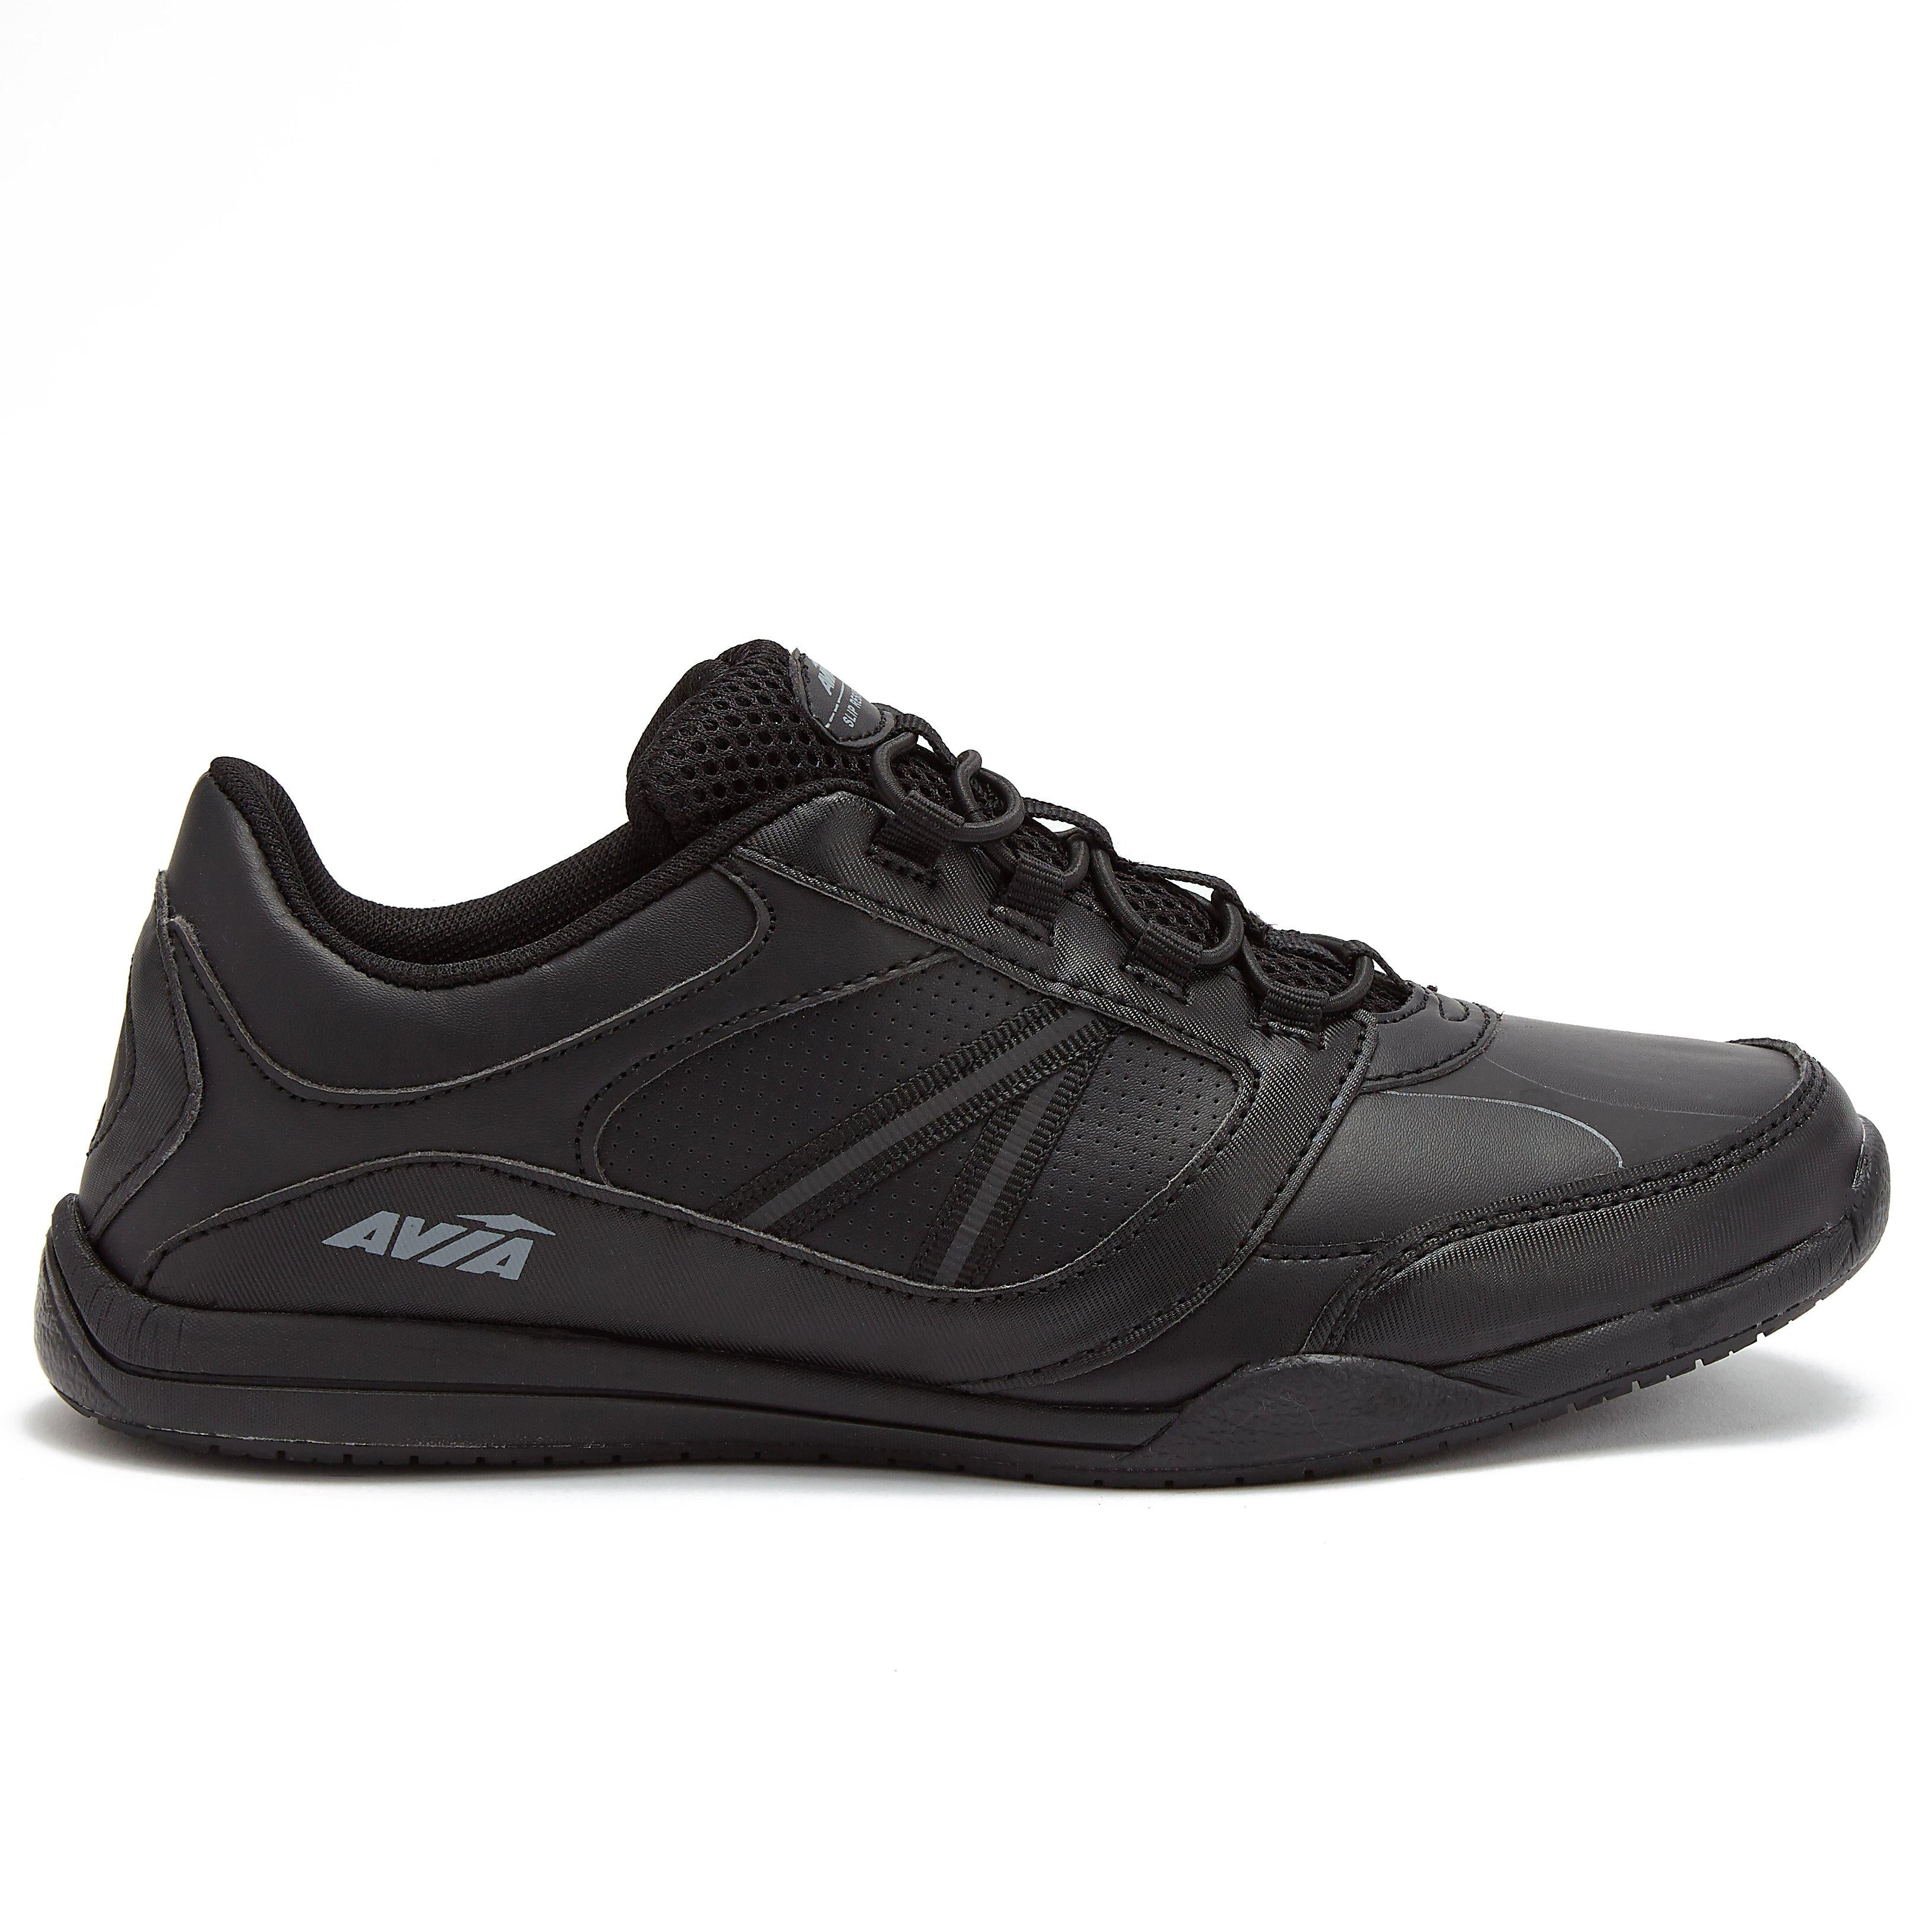 Avia 9999 Avi-Motion Women's Archrocker Flex Plus Sneaker Shoe Black White  Sz 7